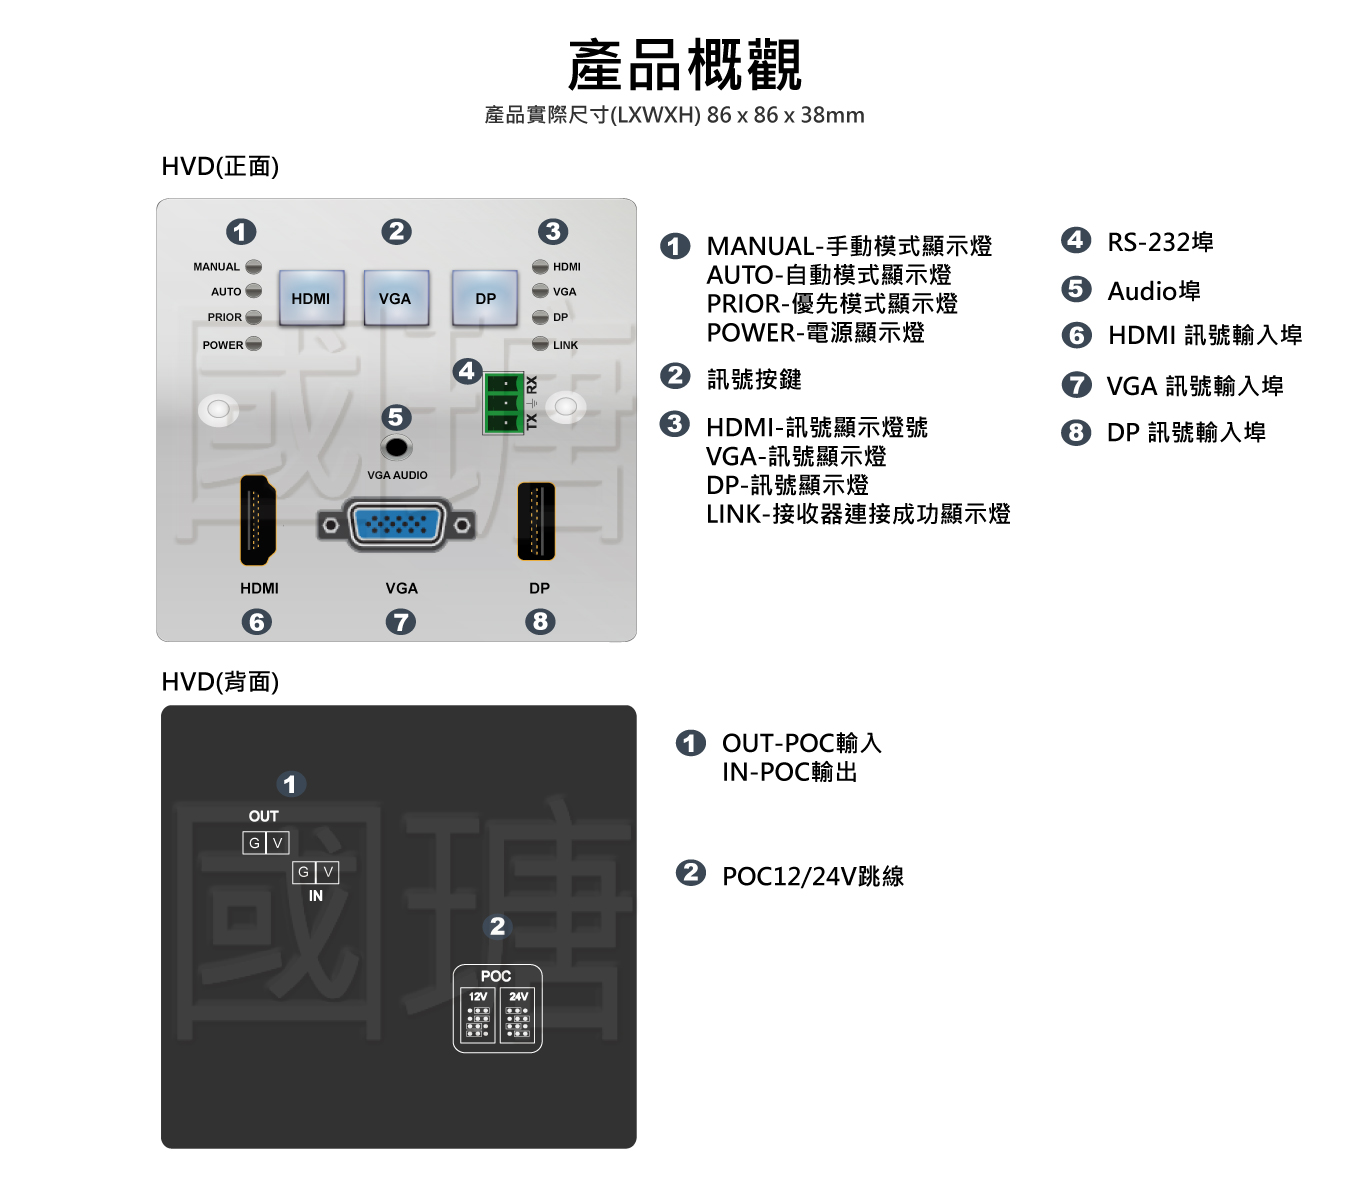 4K HDMI、DP、VGA分散式延伸壁上座插, HDBaseT延伸技術, 壁掛式影音訊號延長器